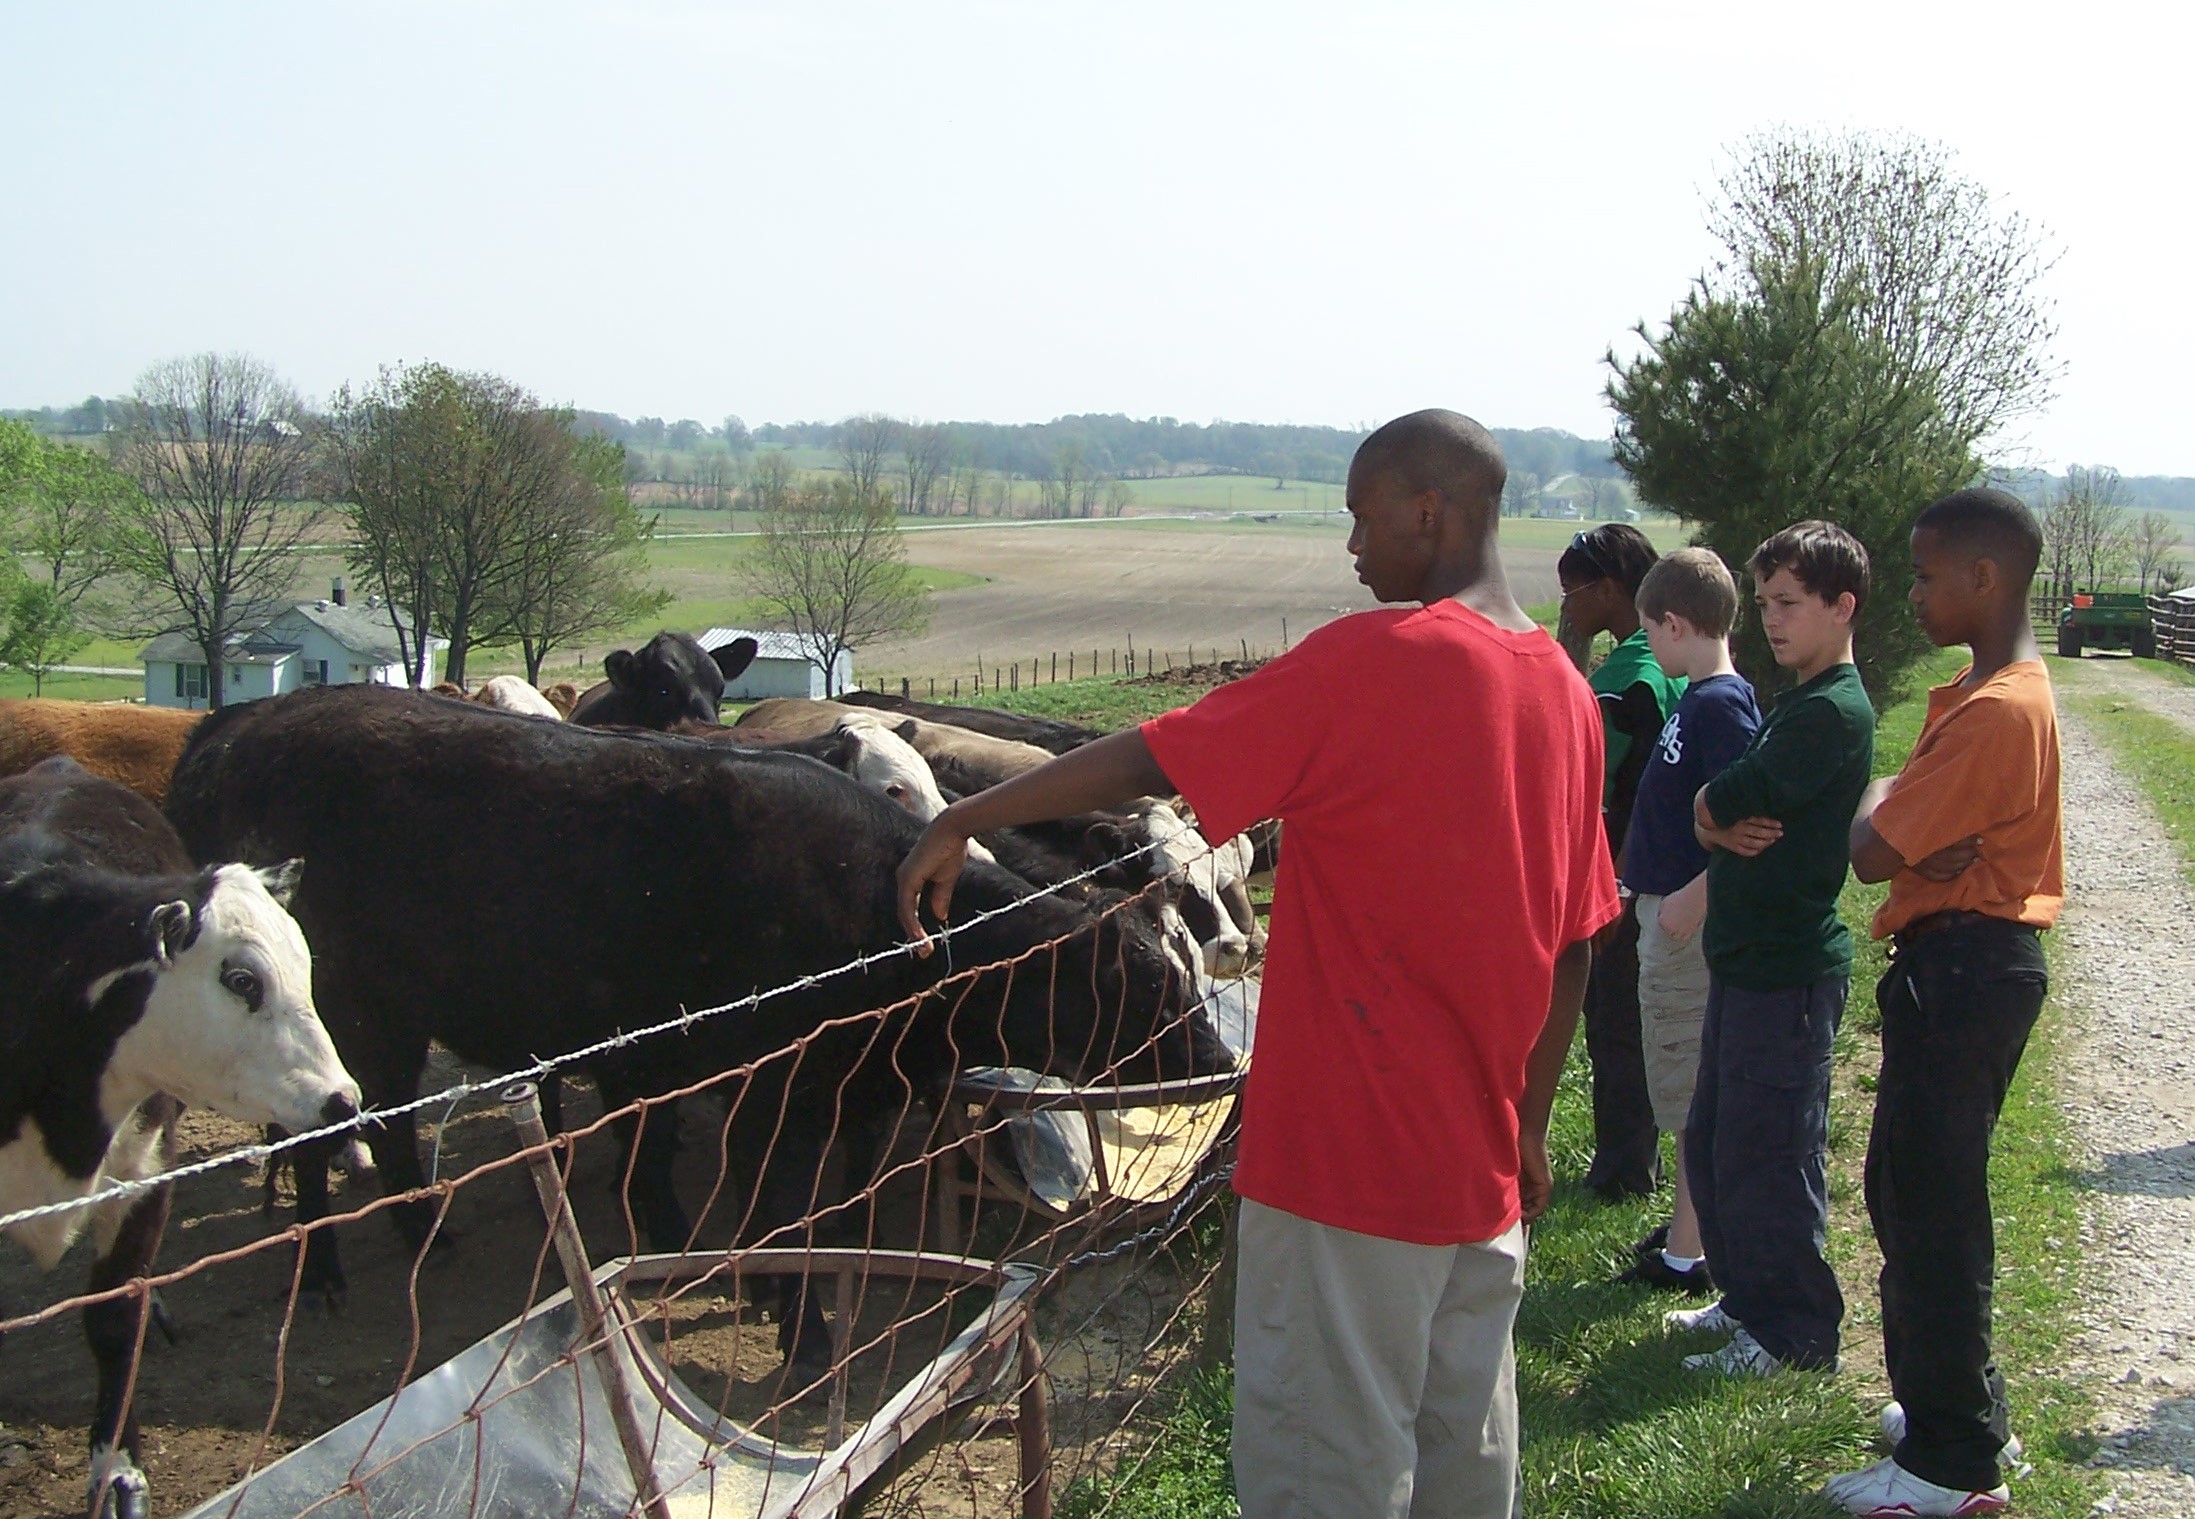 Students look at cows.